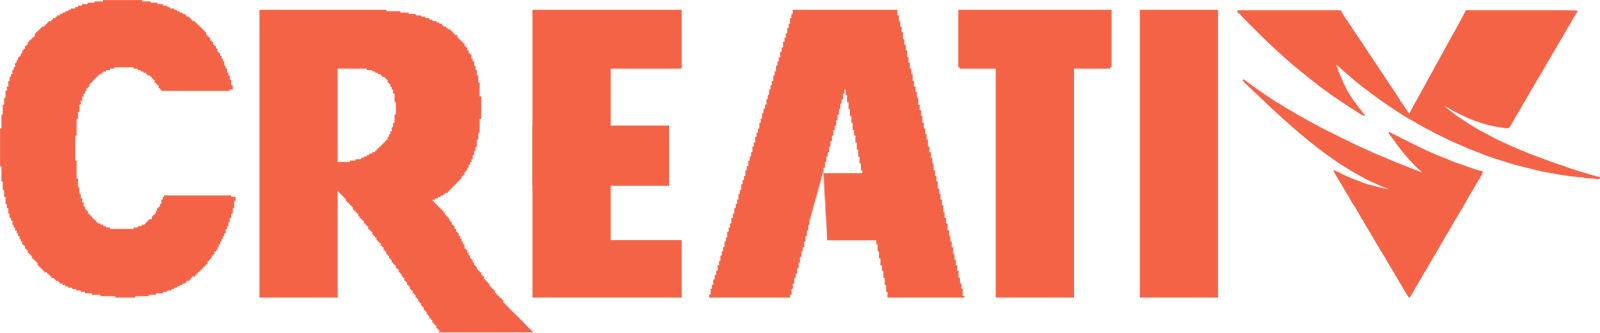 Logo Creativ